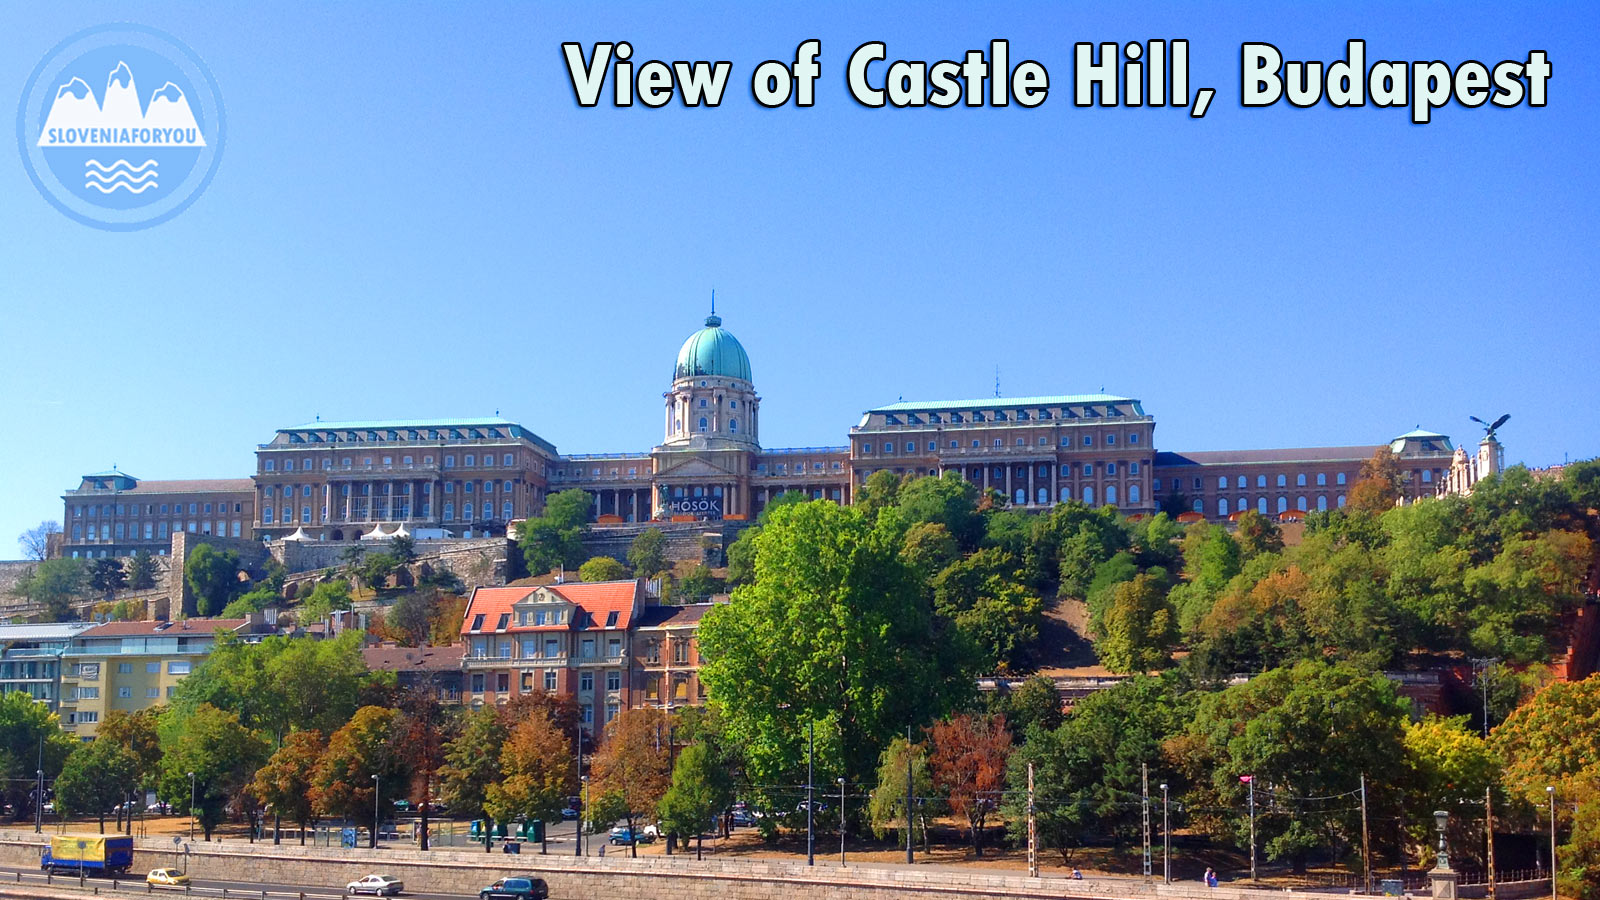 Views of Castle Hill, Budapest, Sloveniaforyou